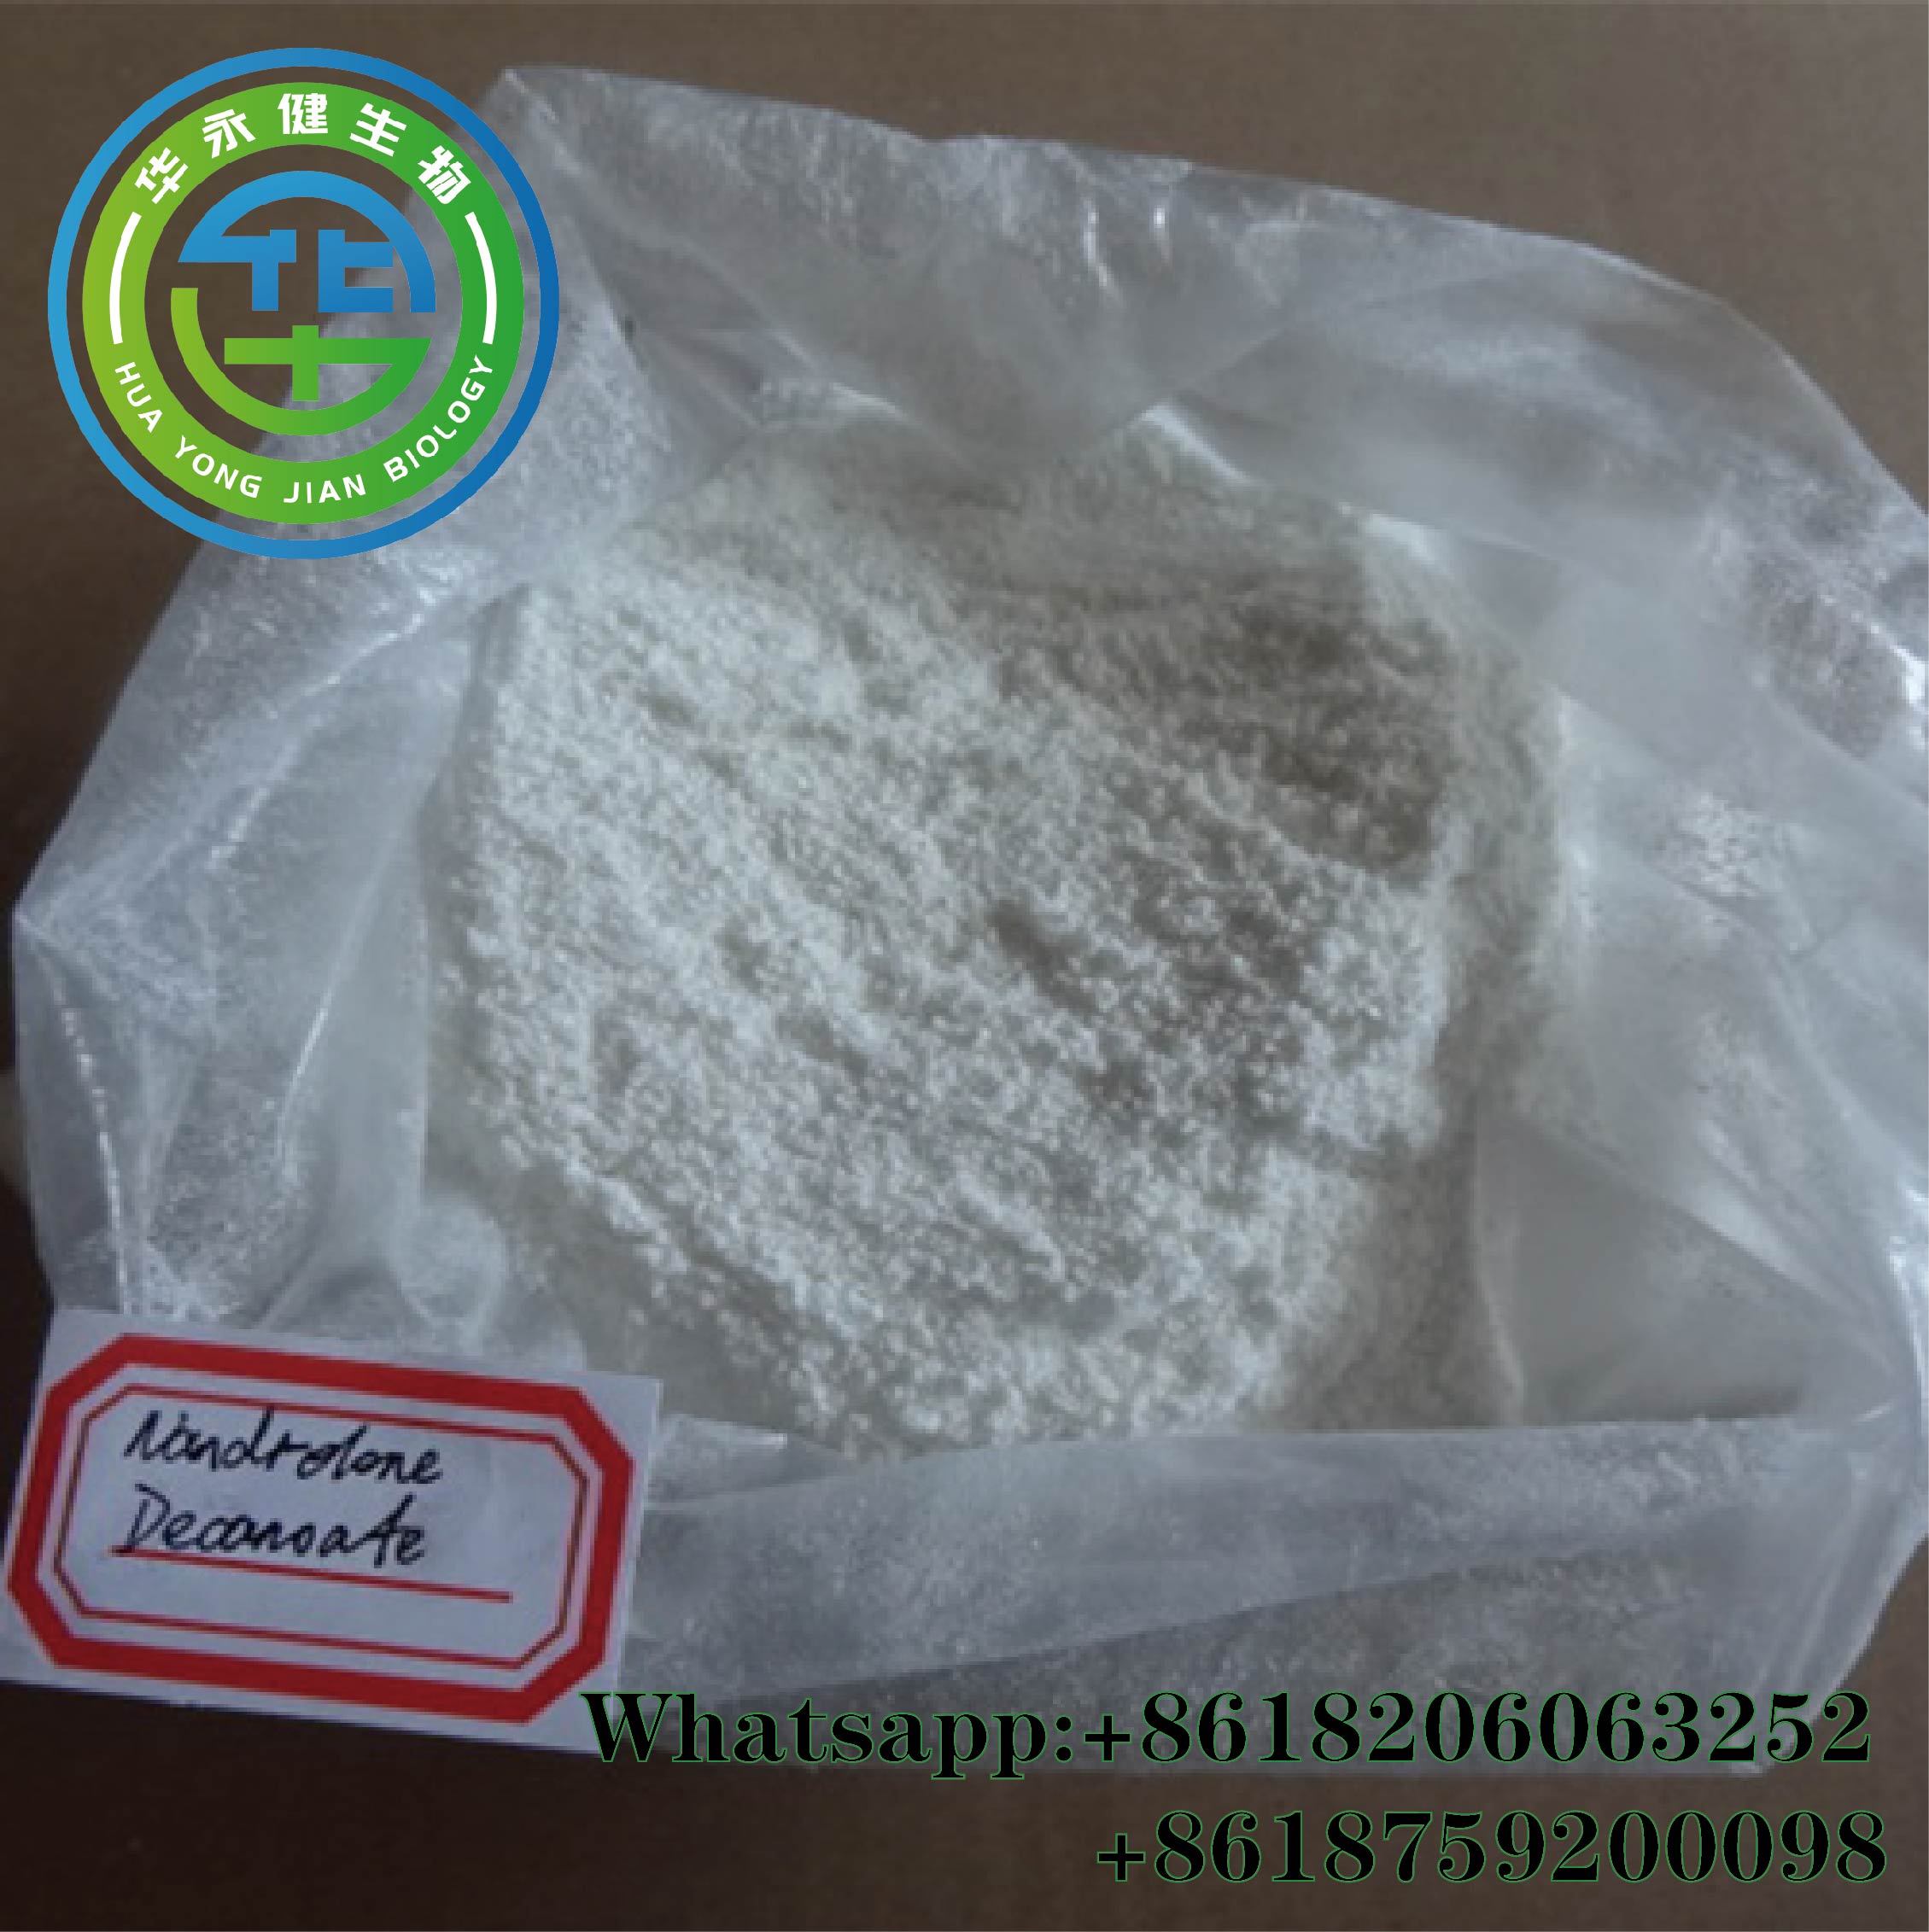 Anabolic Nandrolone Decanoate 100mg / Ml 200mg / Ml Muscle Mass Steroids Deca Durabolin Powder CasNO.360-70-3